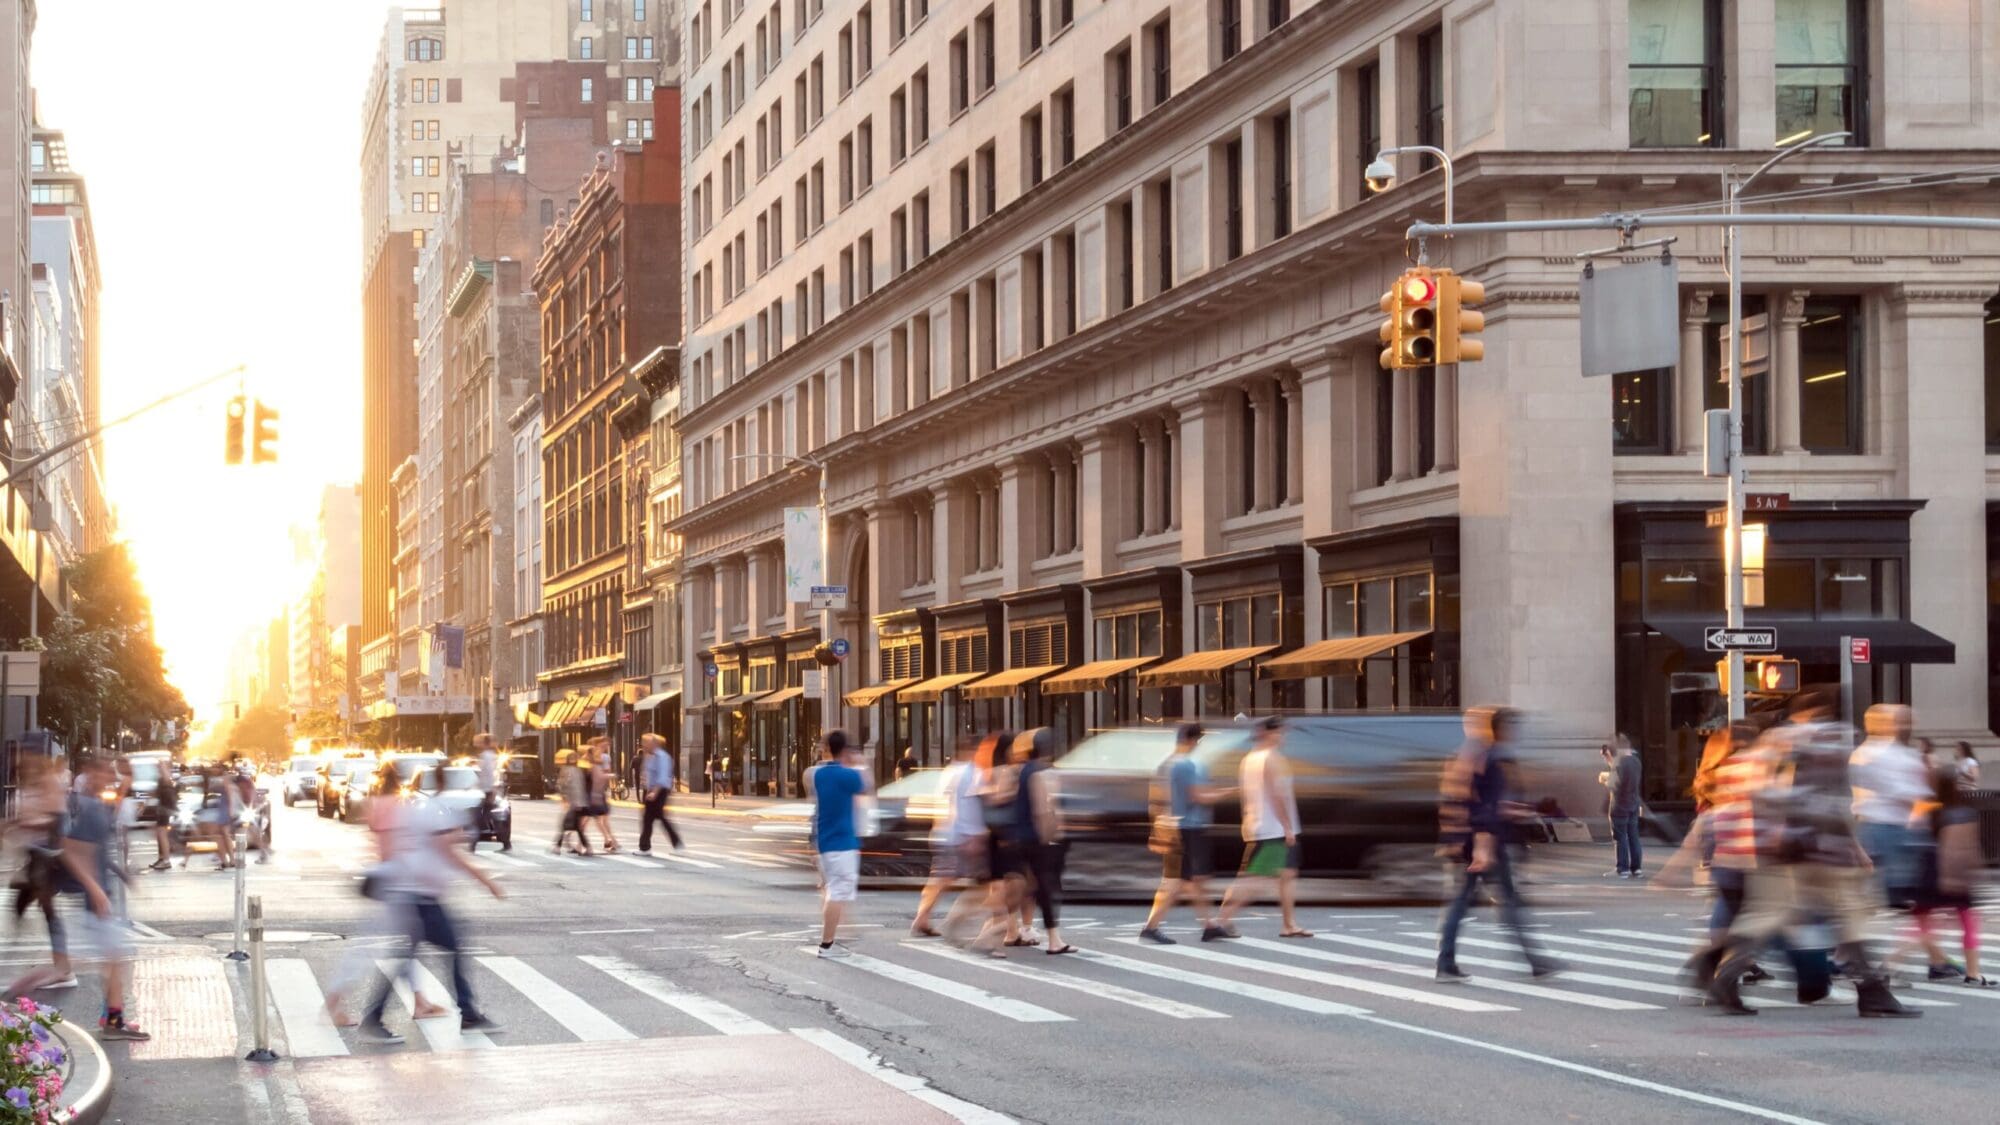 Pedestrians crossing the street in New York City.